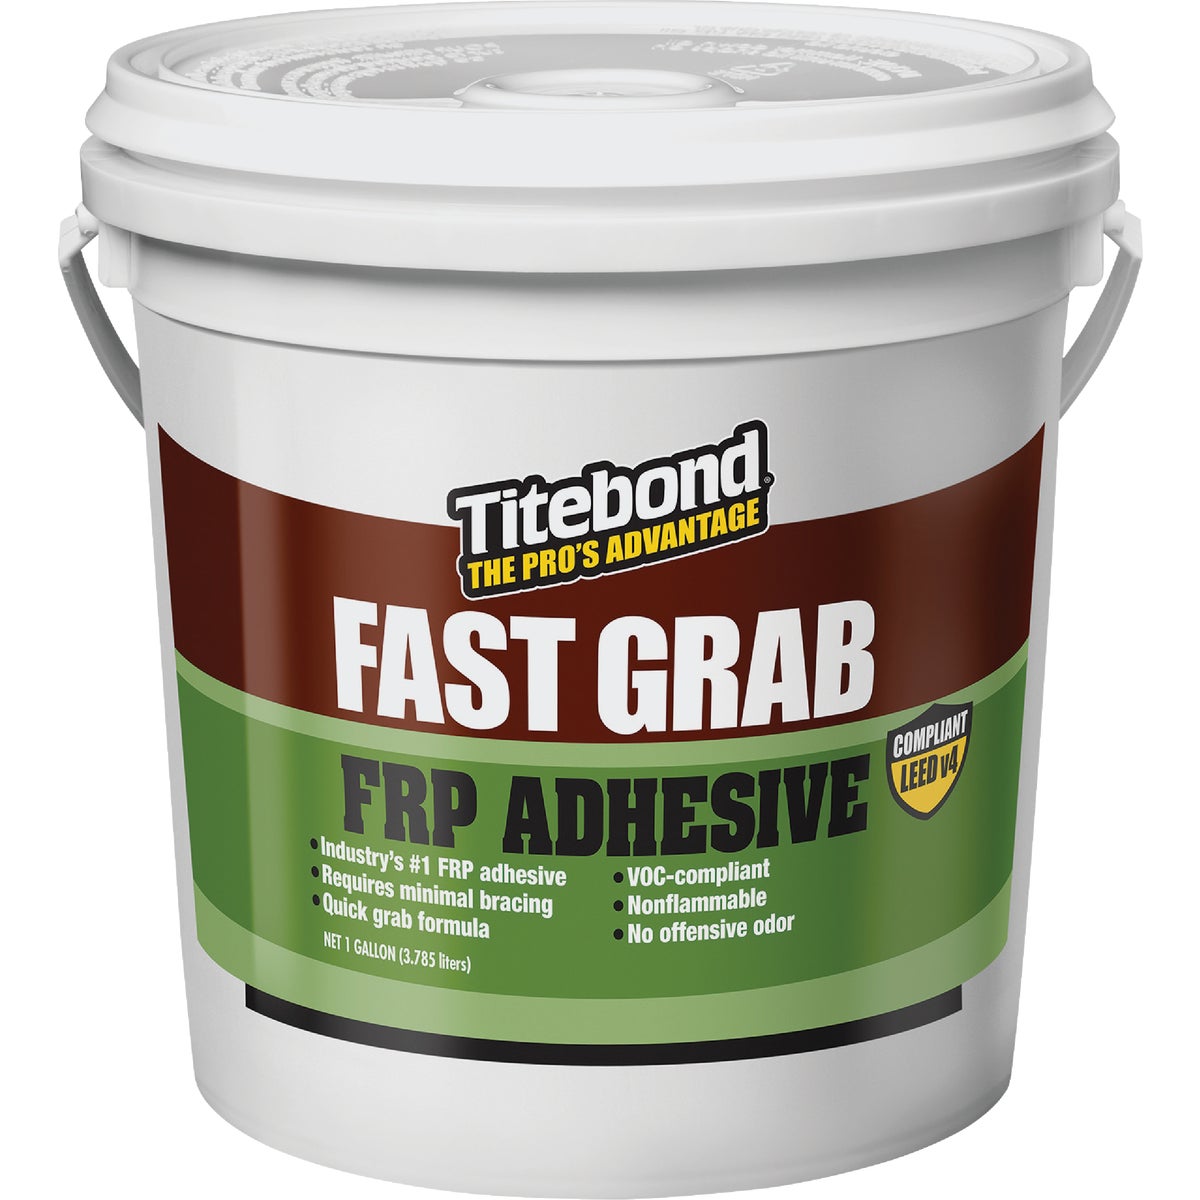 Titebond GREENchoice FAST GRAB 1 Gal. FRP Panel Adhesive